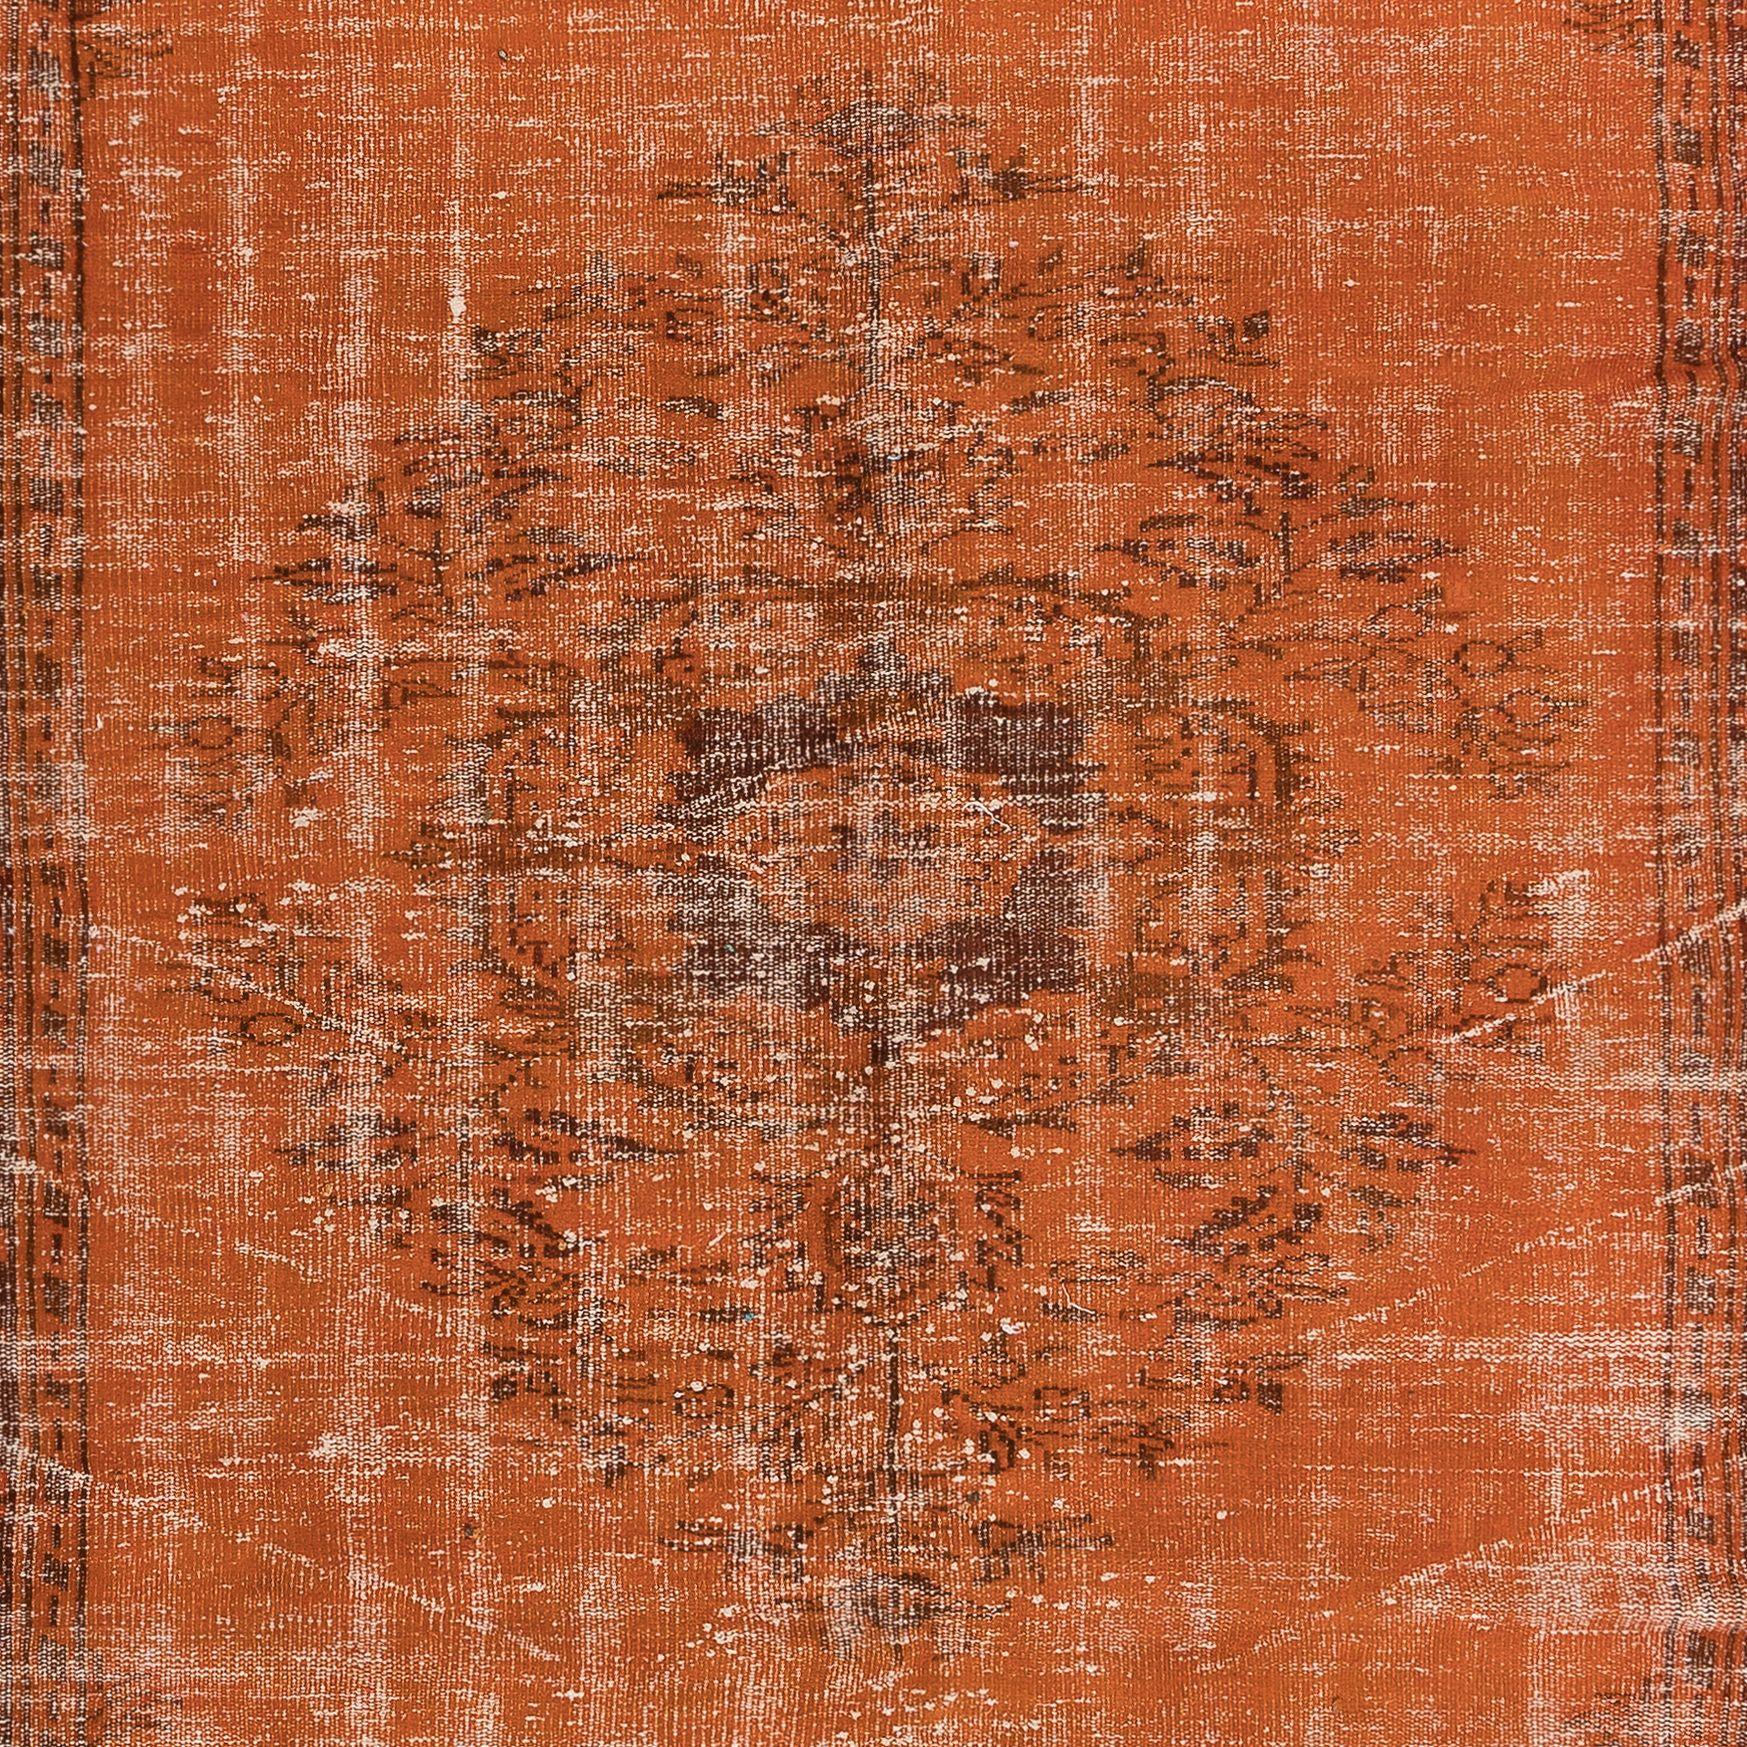 20th Century 6.3x9.6 Ft Modern Handmade Turkish Wool Area Rug in Orange Colors For Sale